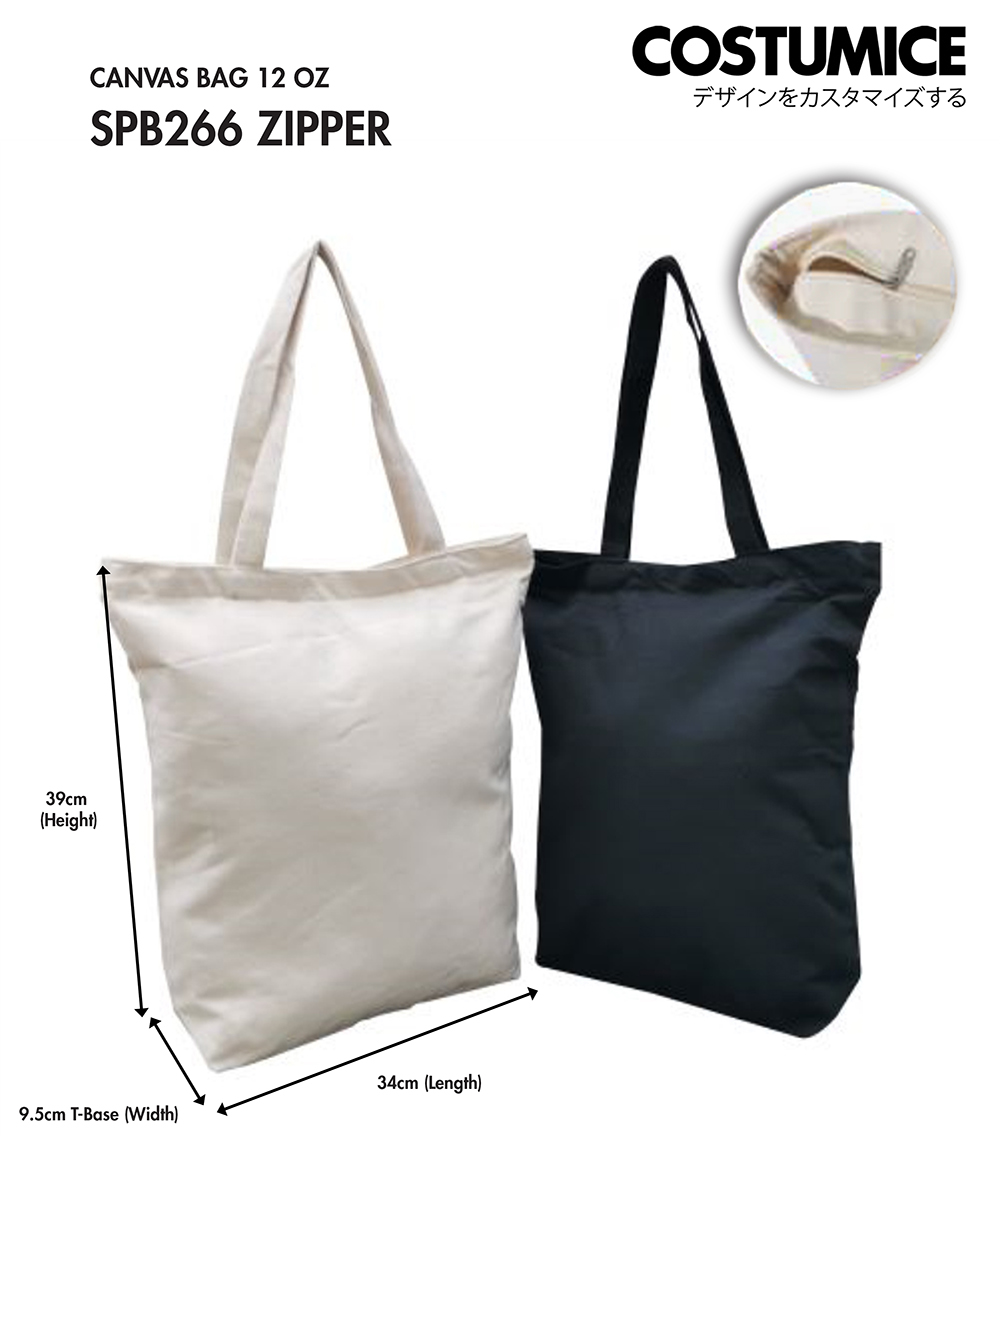 Tote bag print size - The Printed Image